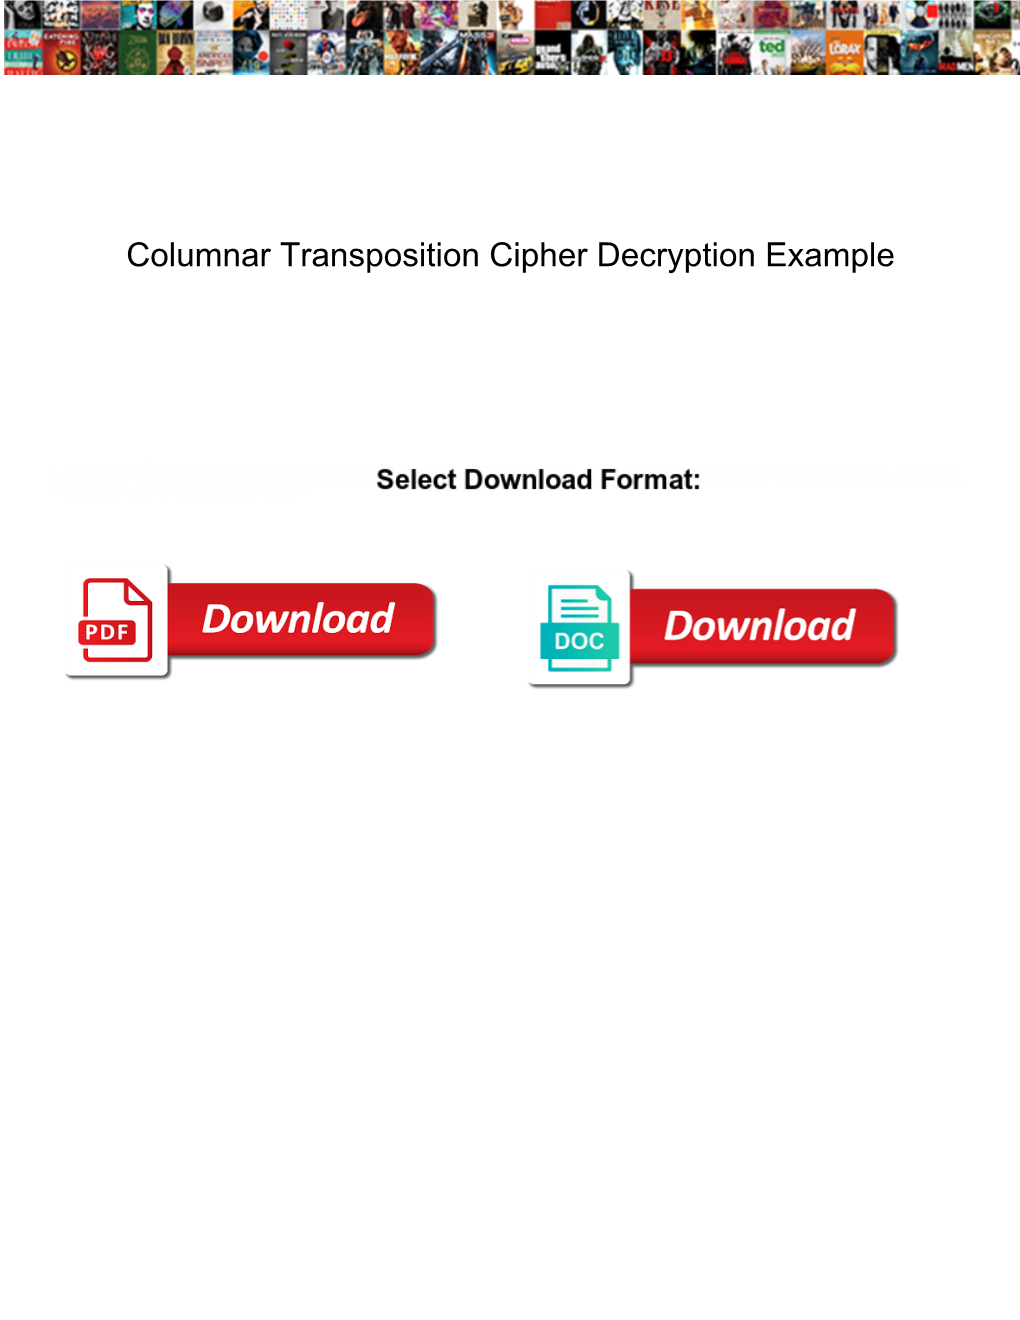 Columnar Transposition Cipher Decryption Example